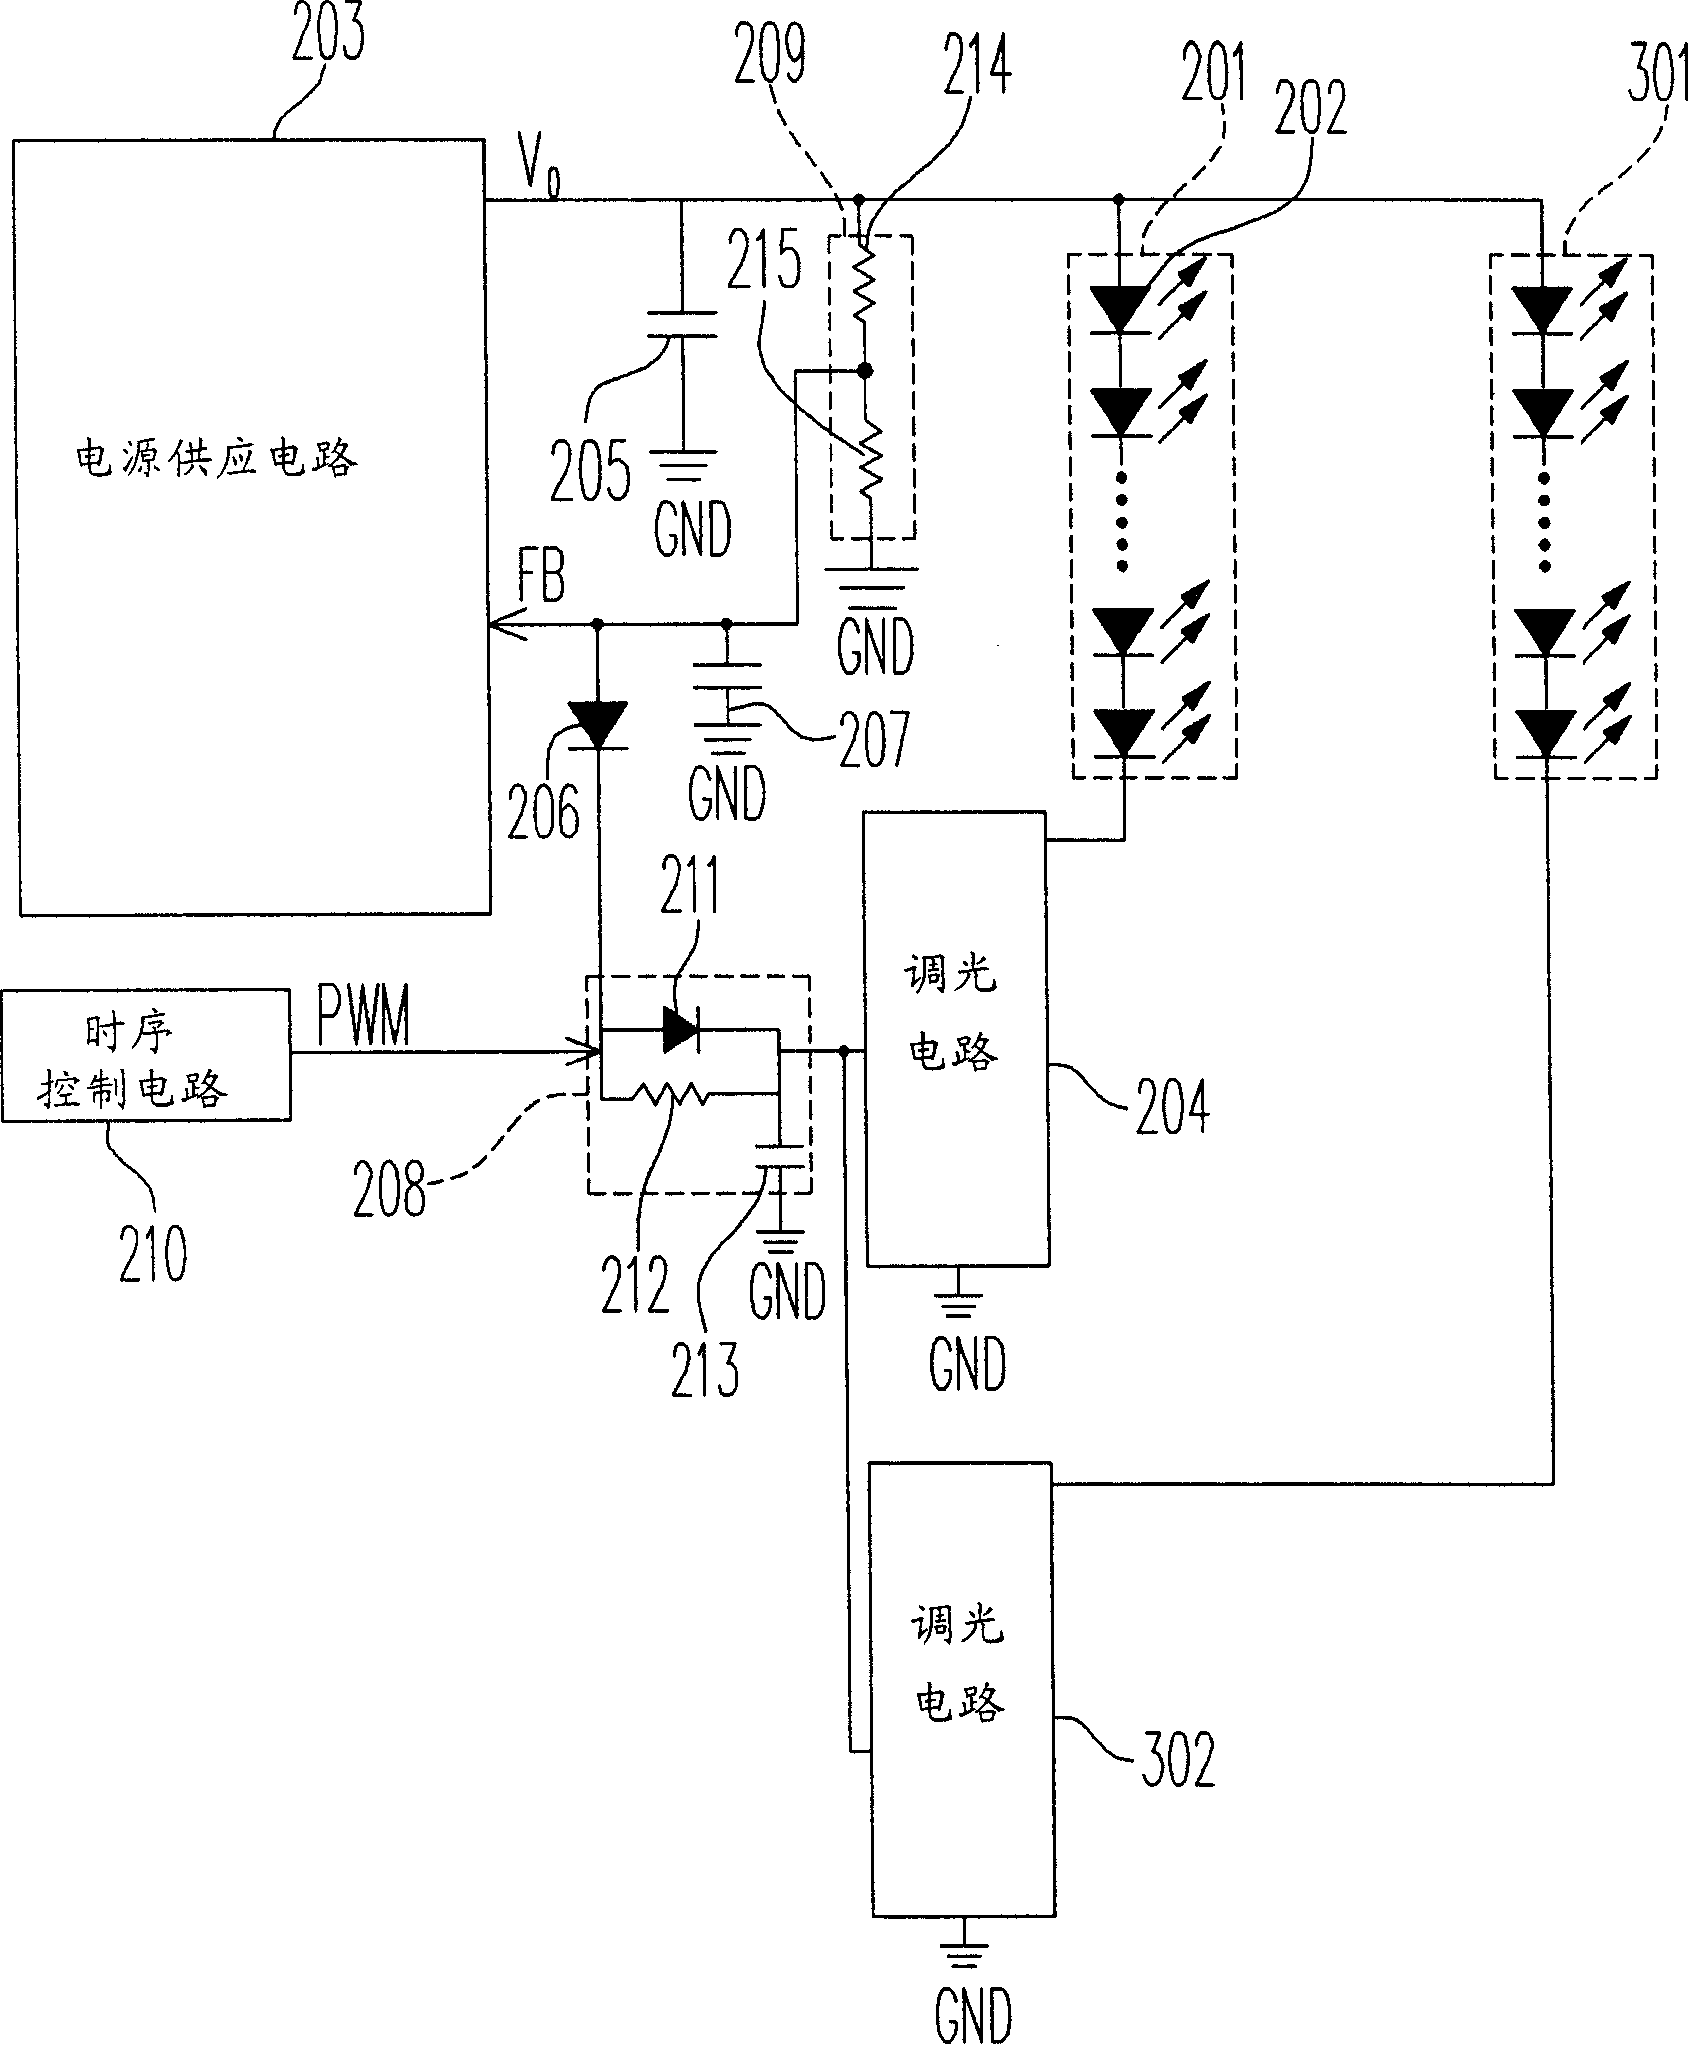 Light source drive circuit